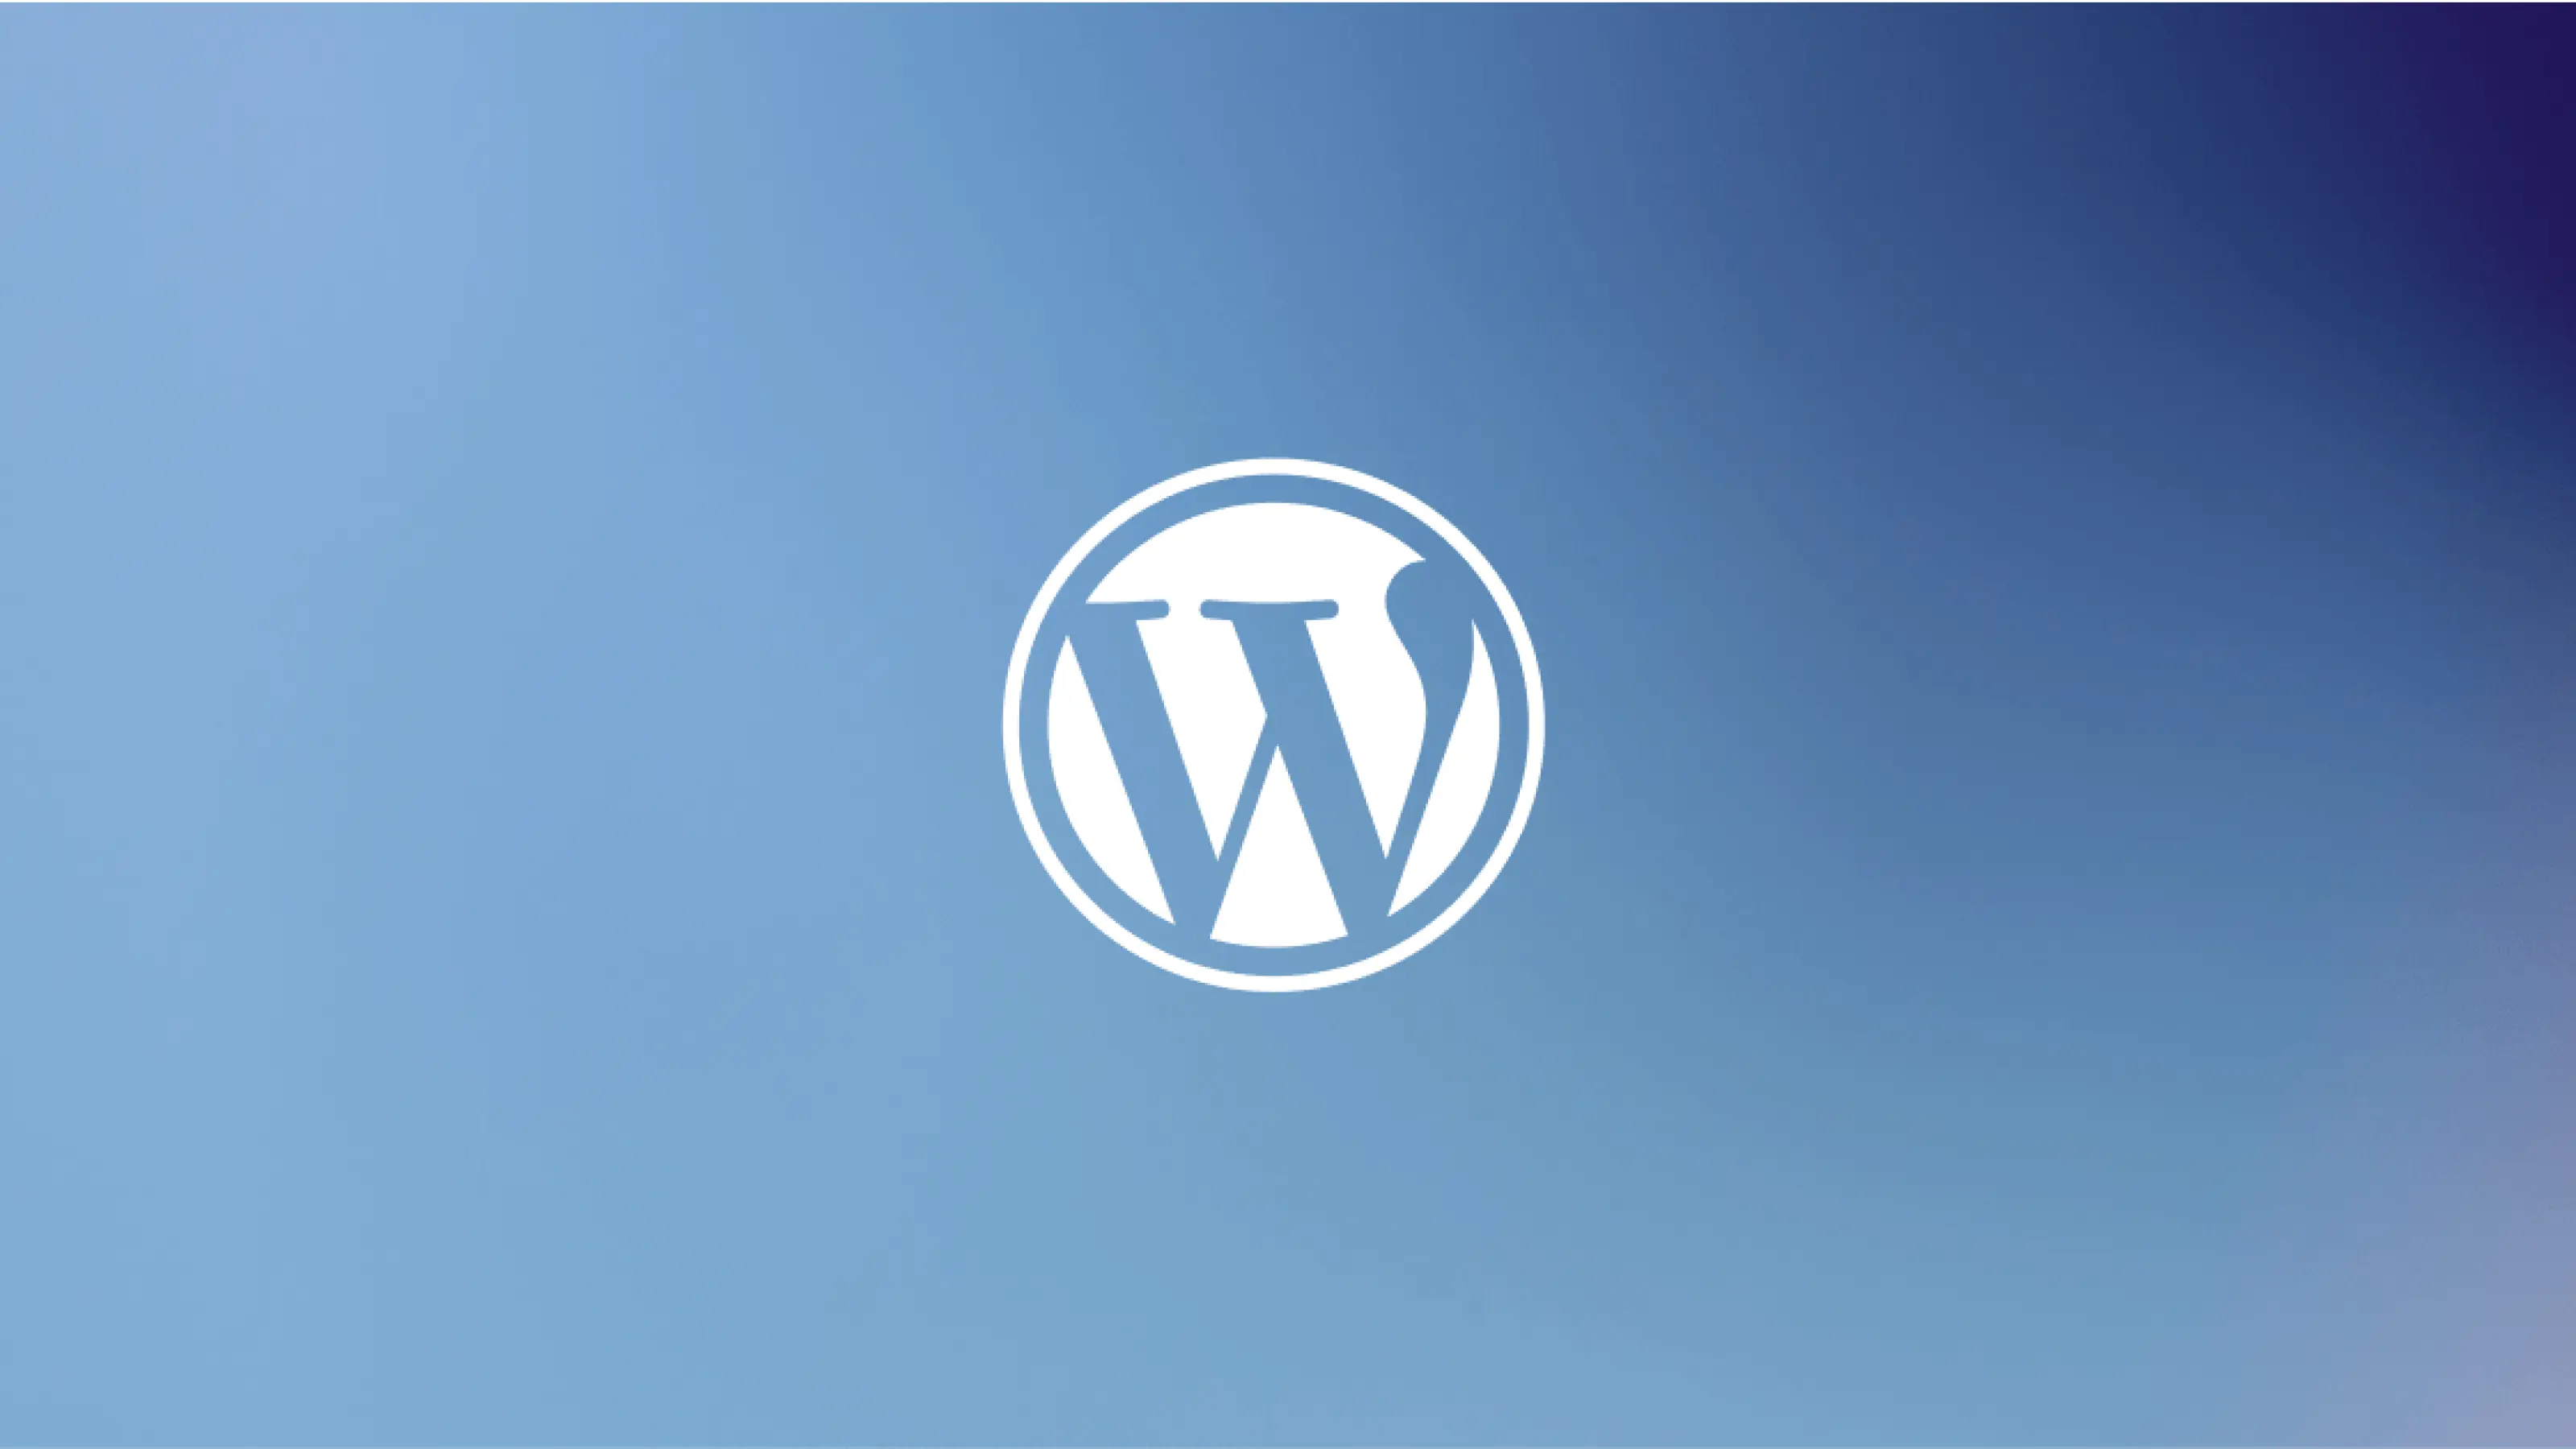 Is WordPress Dying?